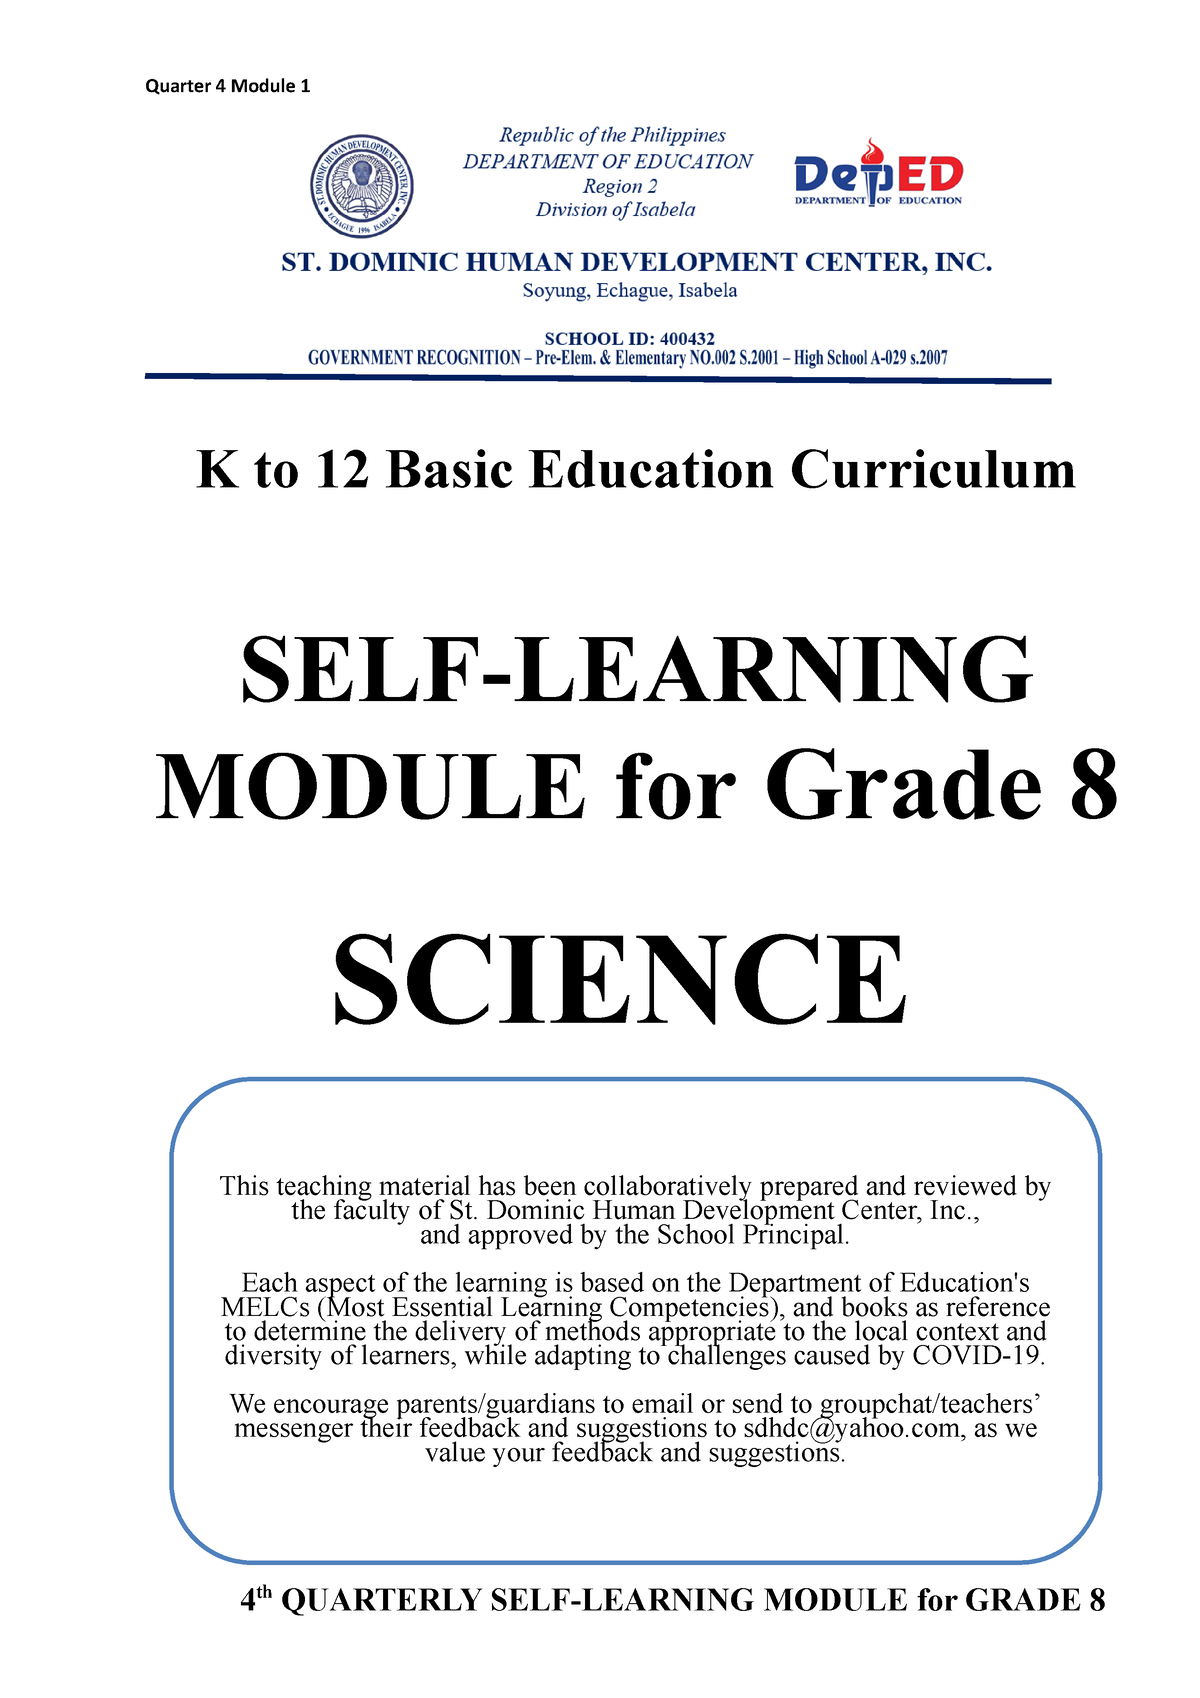 science-8-q4-module-1456-quarter-4-module-1-k-to-12-basic-education